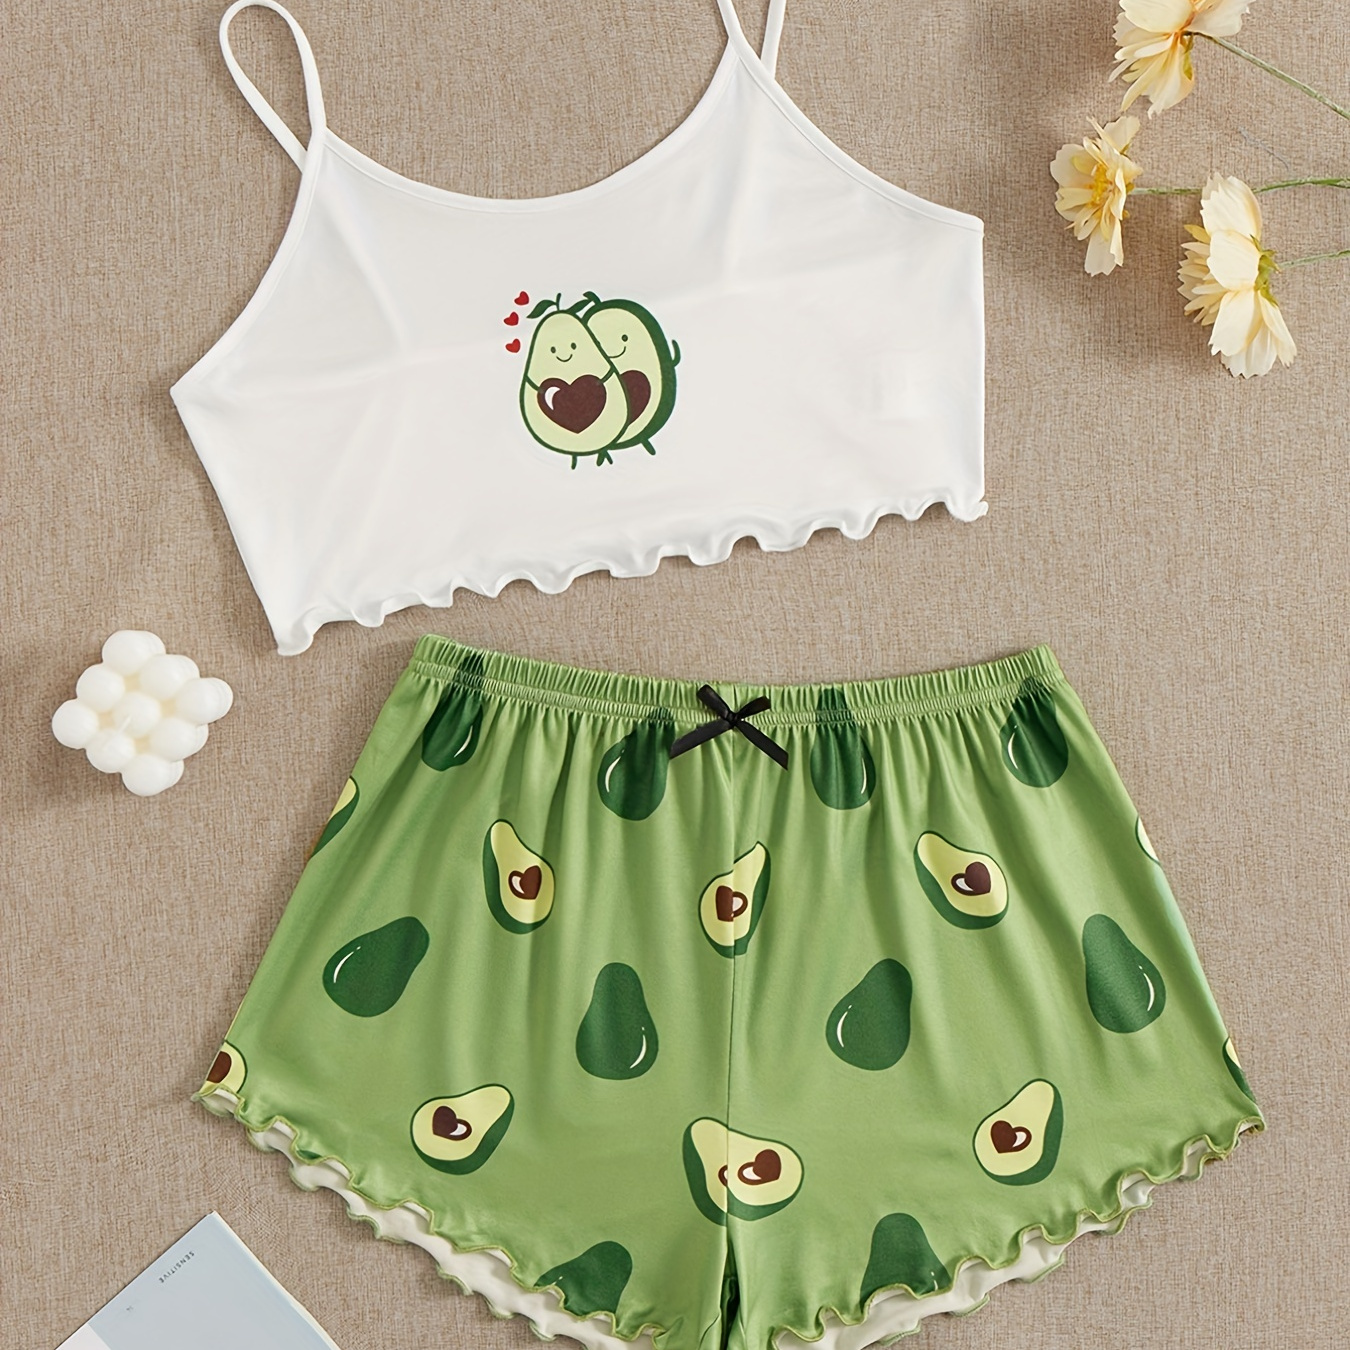 

Avocado Print Pajama Set, Lettuce Trim Cami Top & Elastic Waistband Shorts, Women's Sleepwear & Loungewear